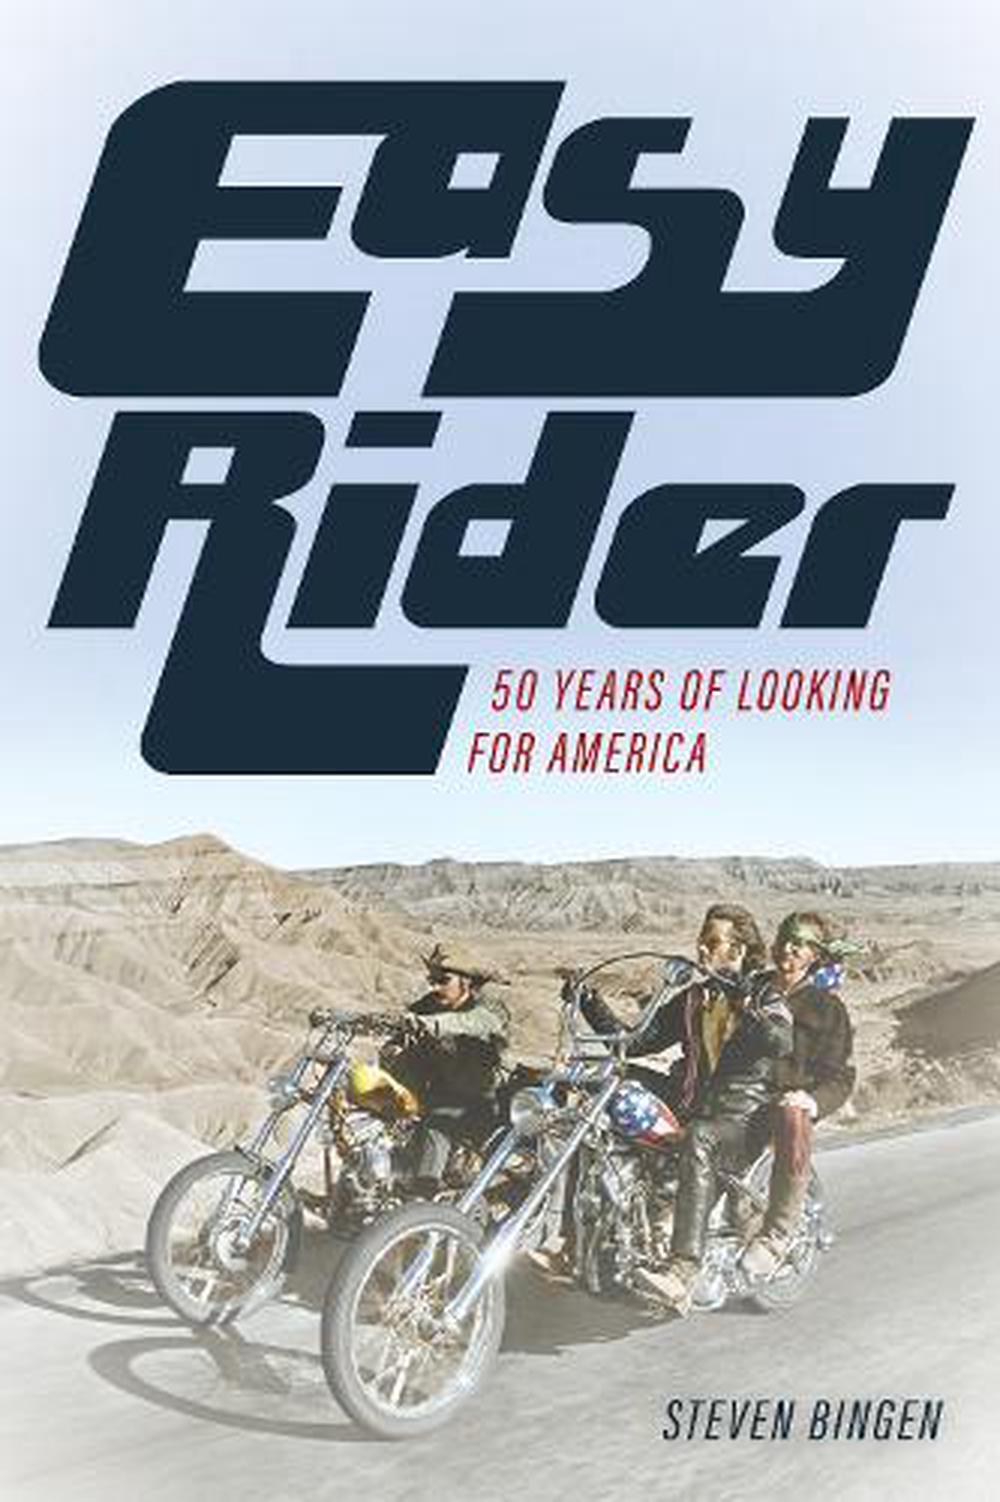 The American Dream In Easy Rider